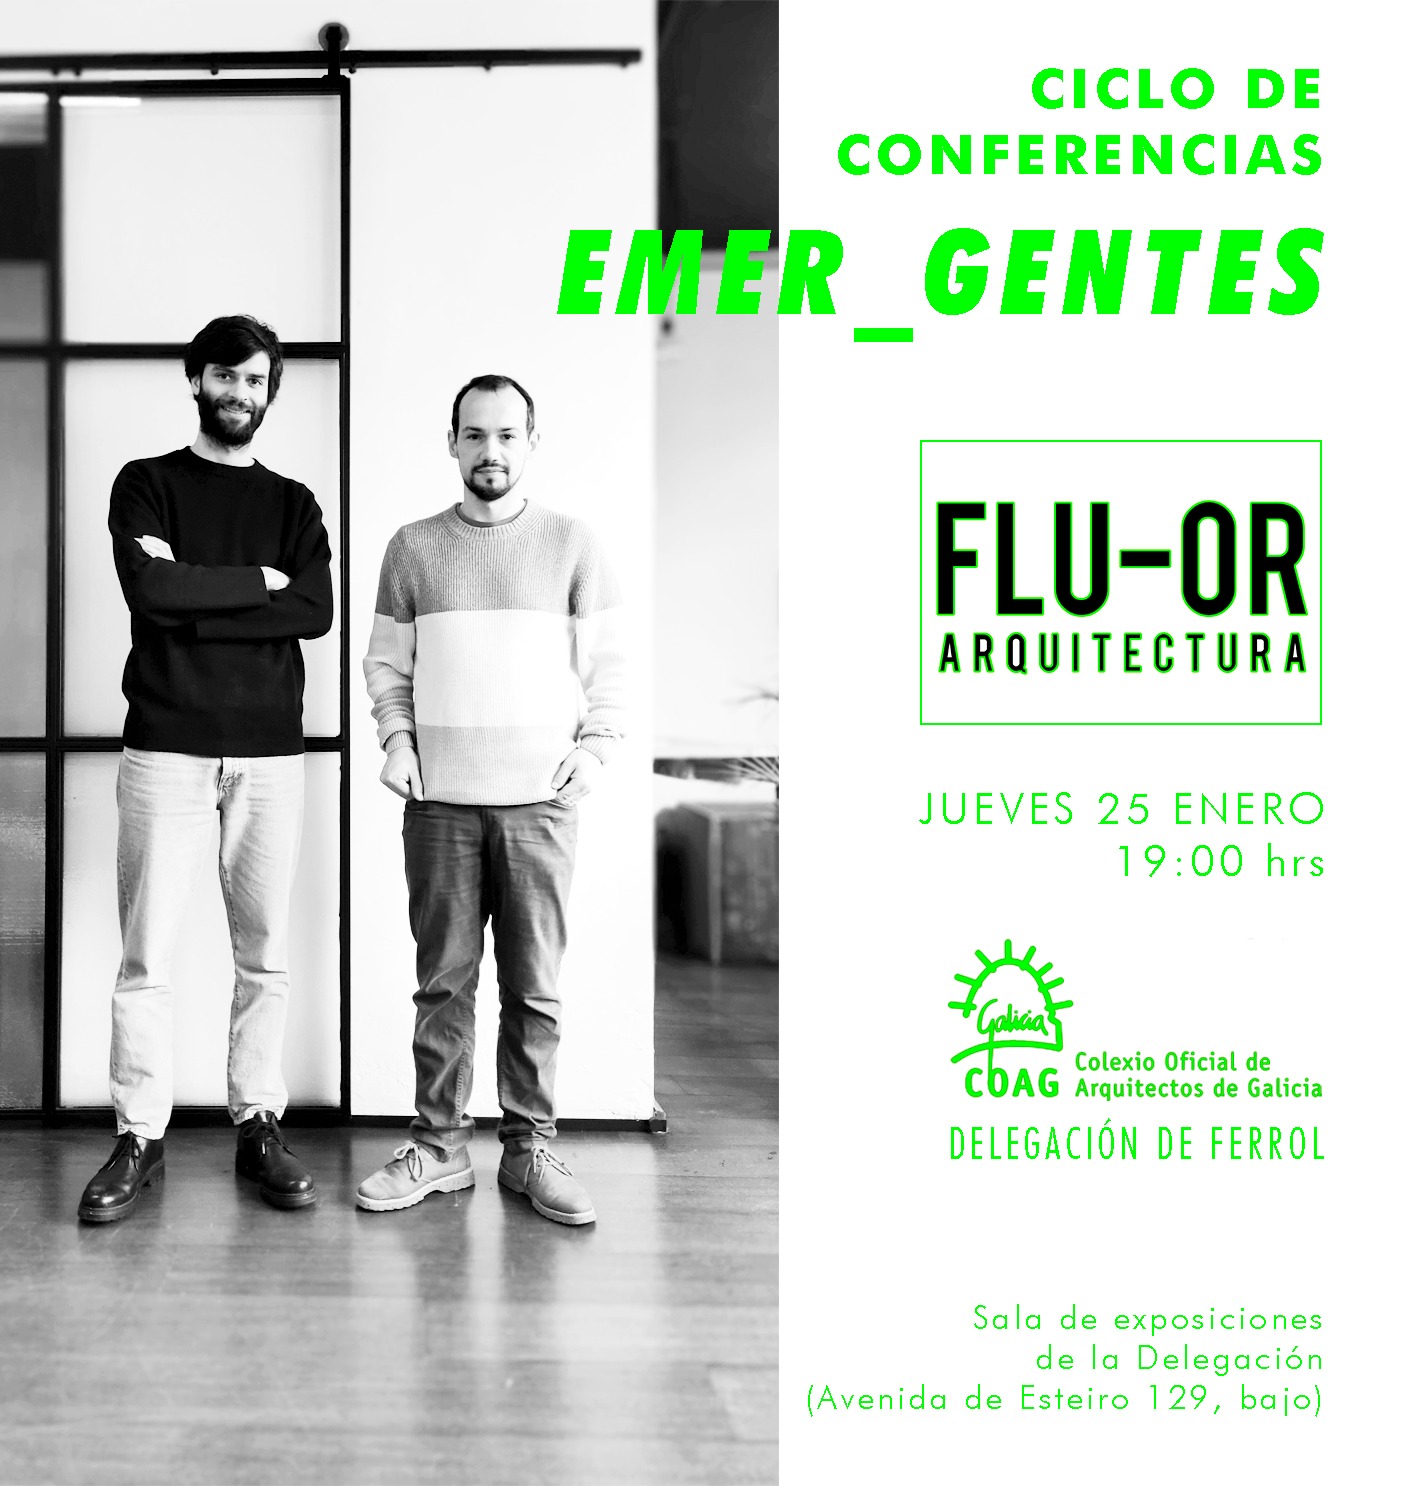 Ciclo de Conferencias EMER_GENTES / FLU-OR Arquitectura